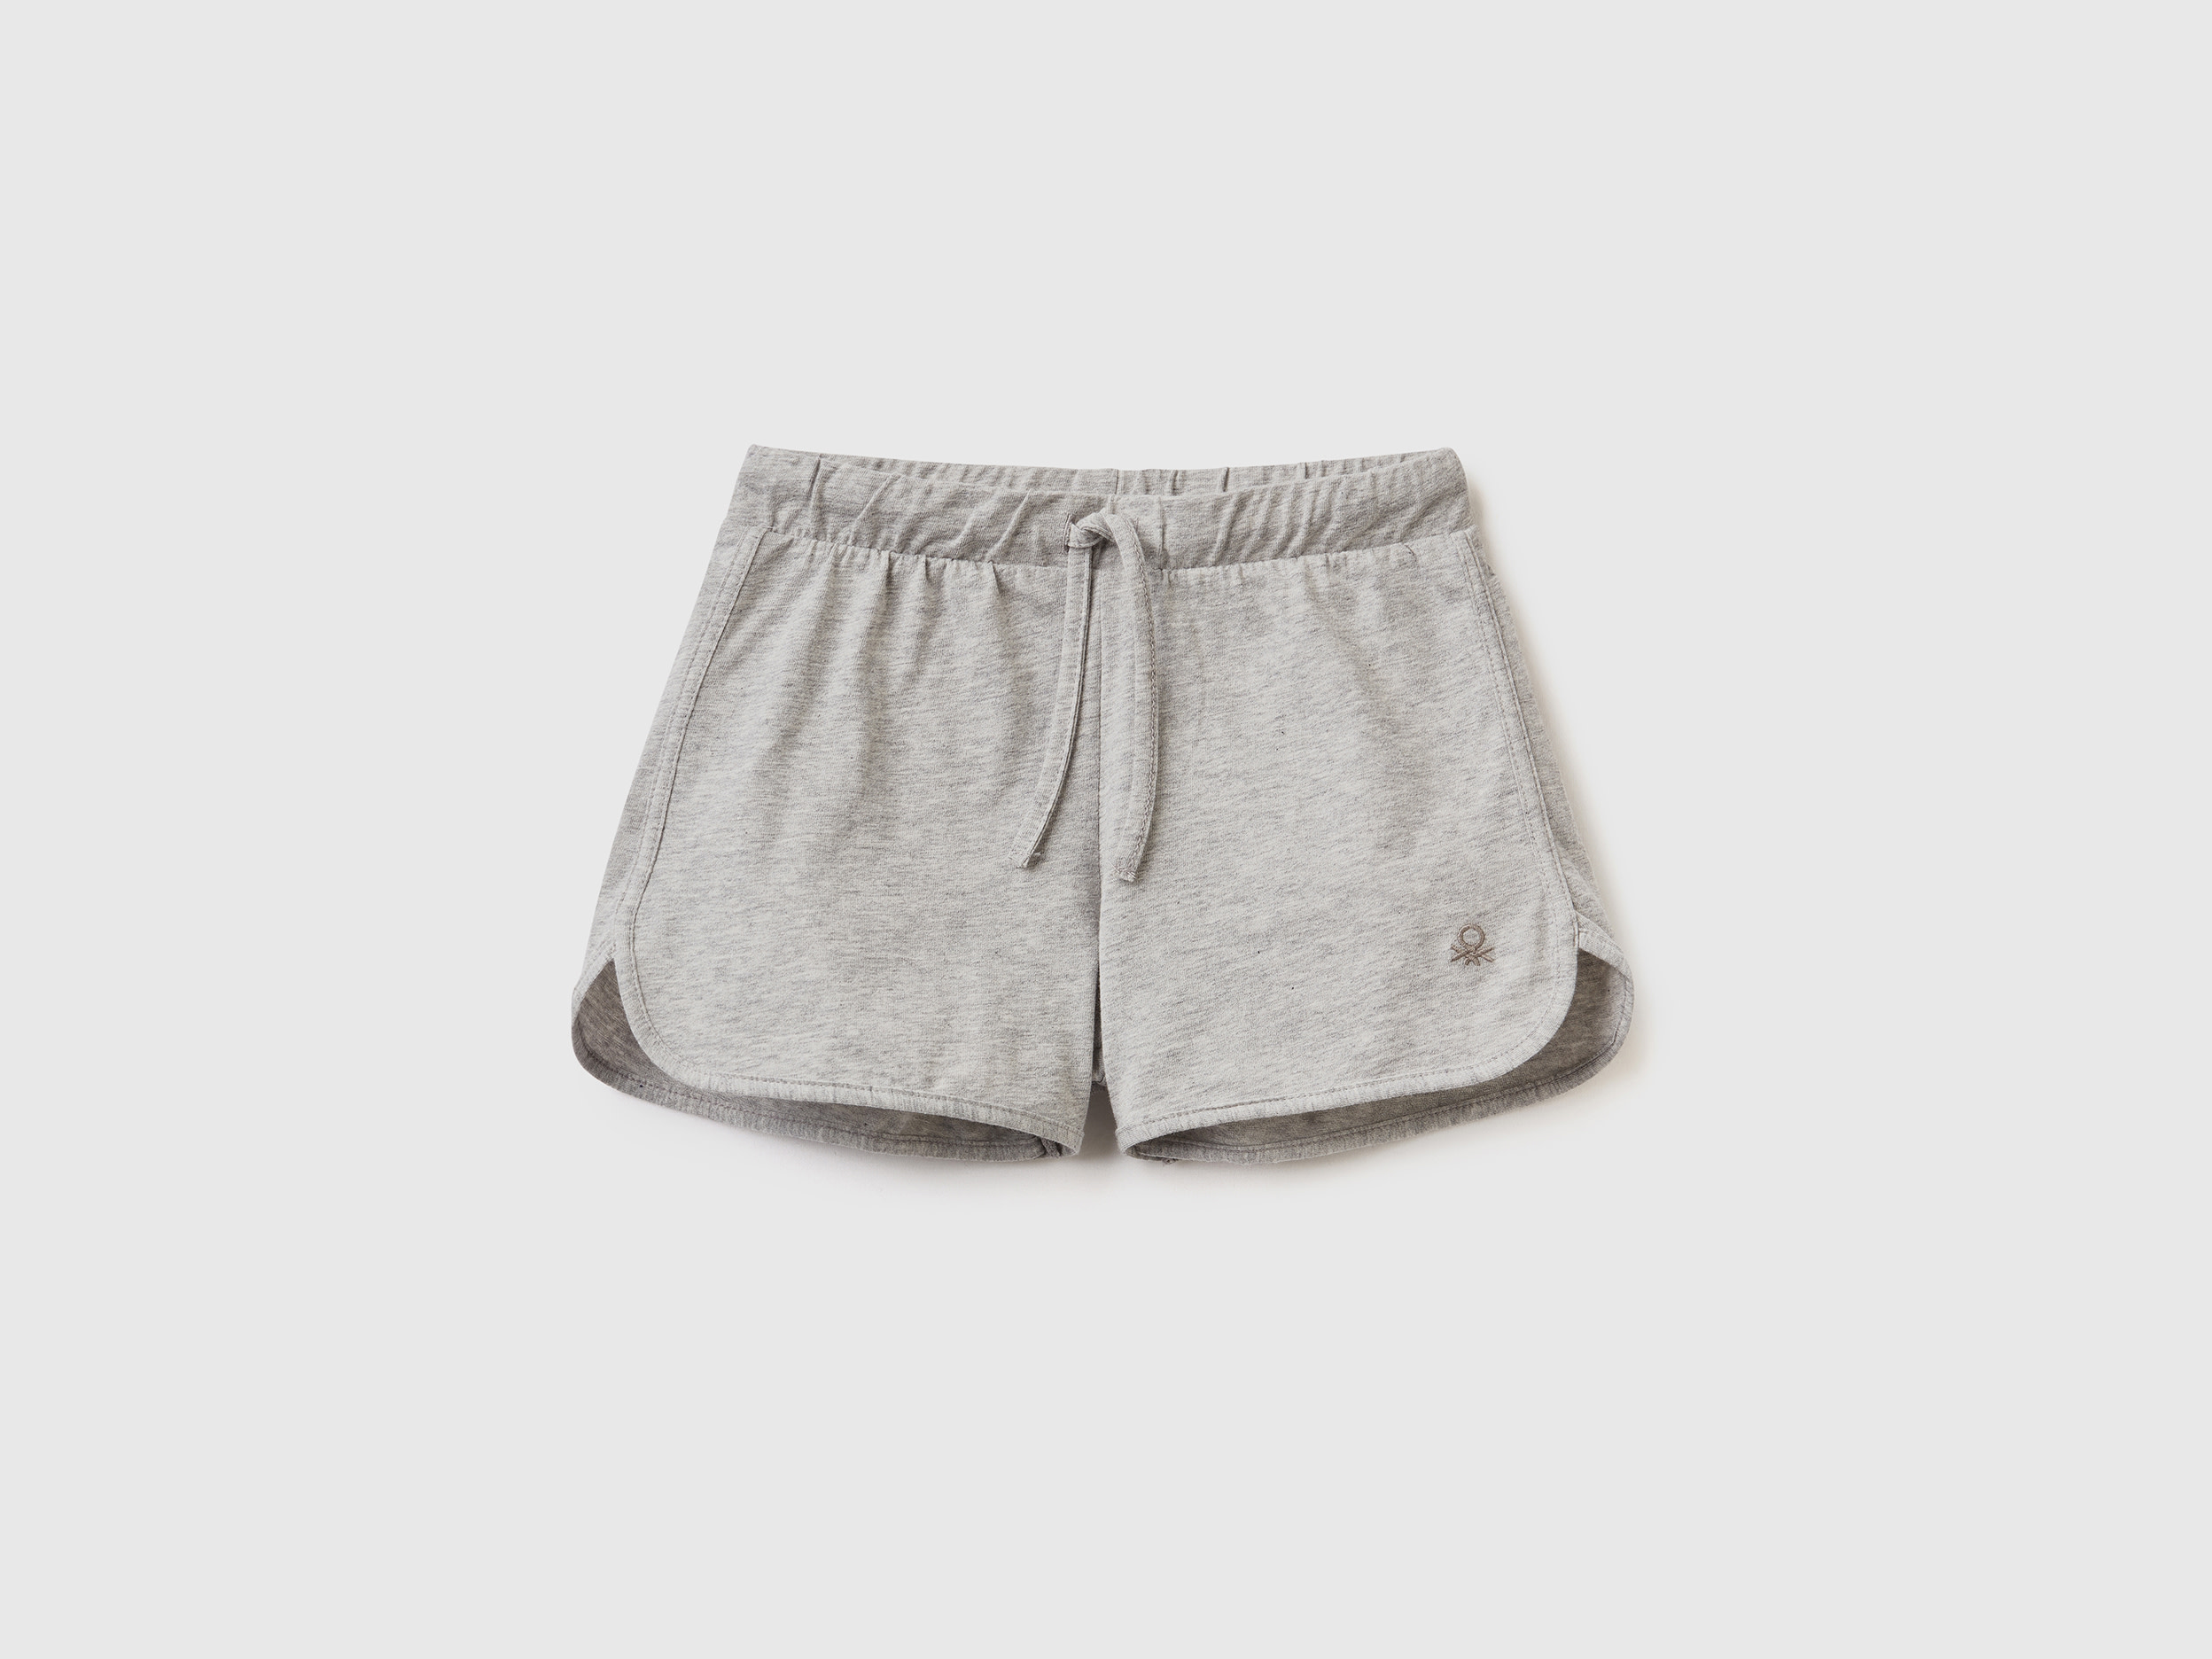 Image of Benetton, Runner Style Shorts In Organic Cotton, size M, Light Gray, Kids